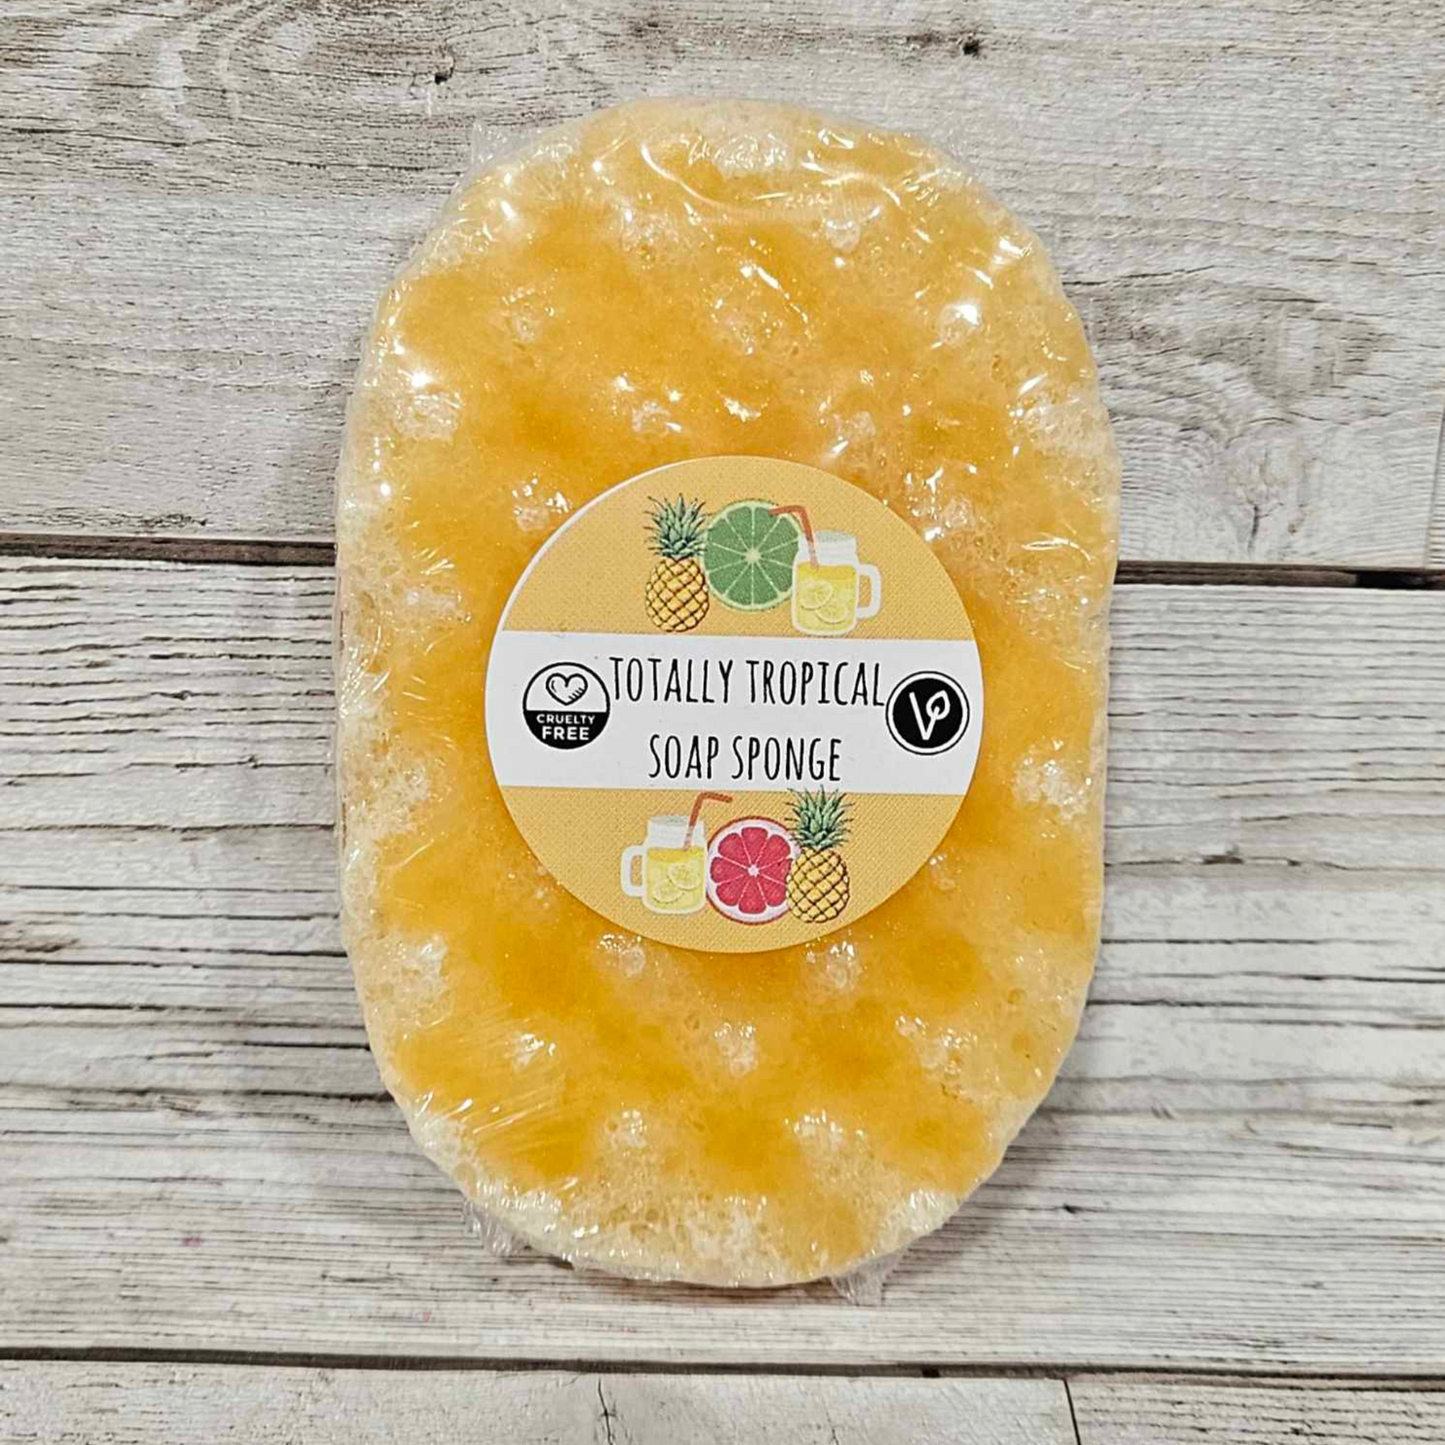 'Totally Tropical' Soap Sponge